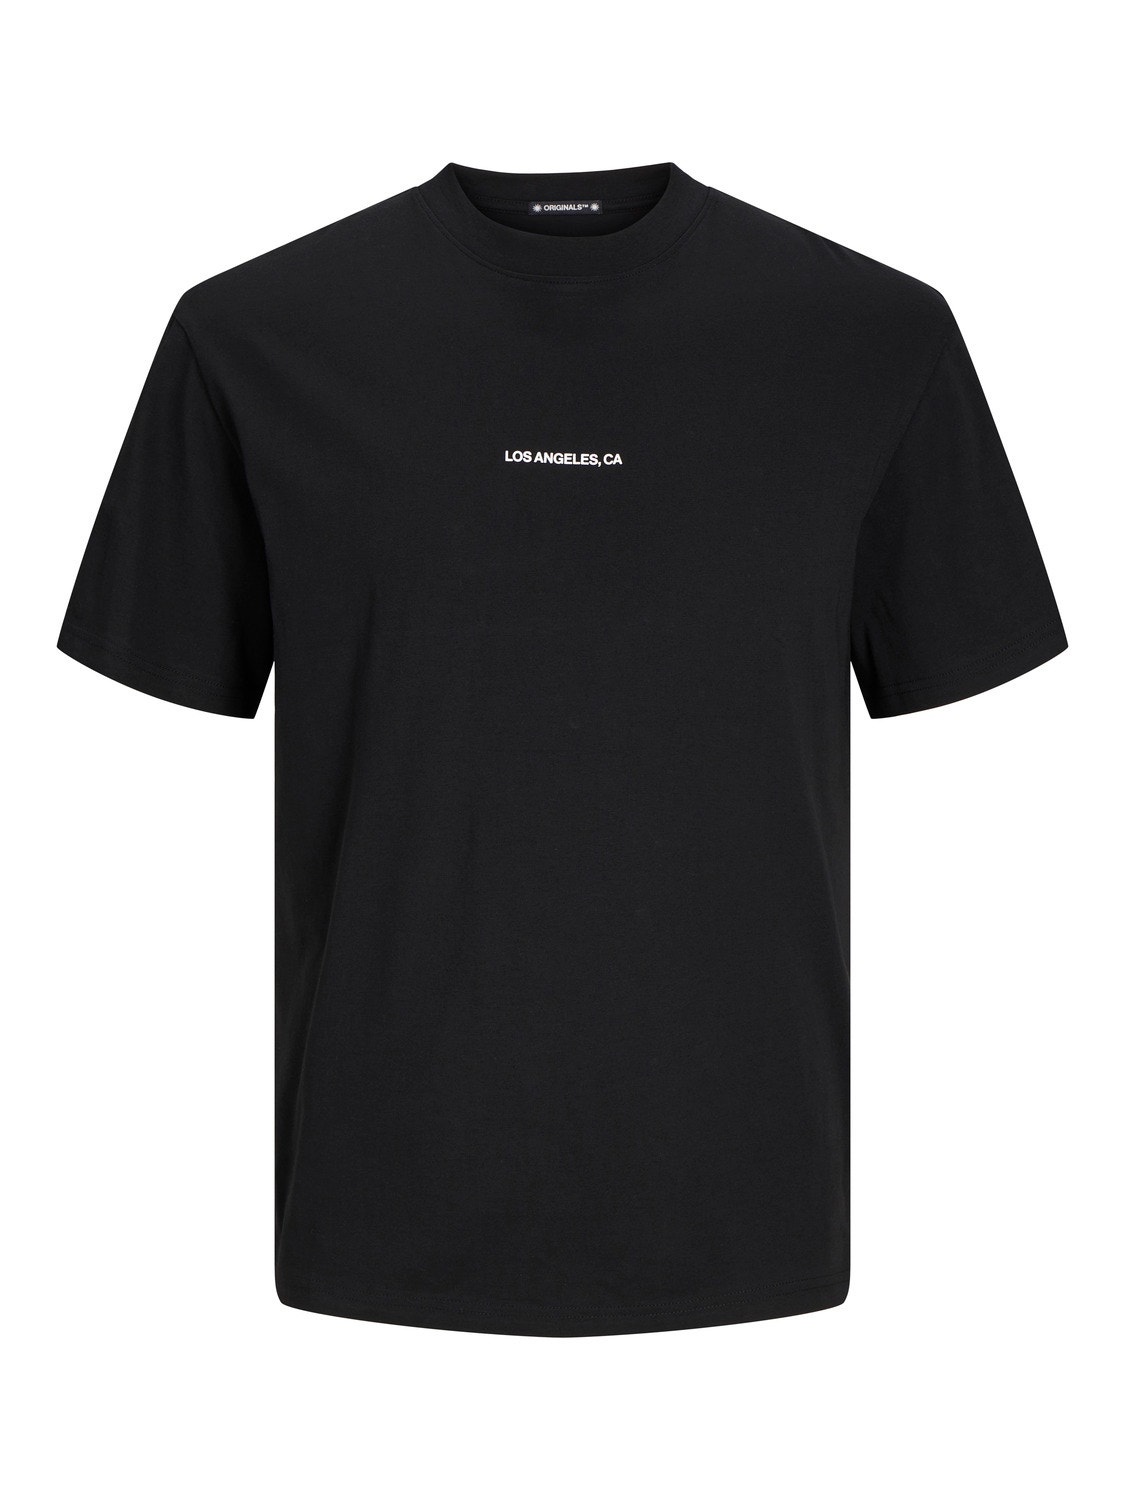 Jack & Jones Printed Crew Neck T-shirt -Black - 12255525